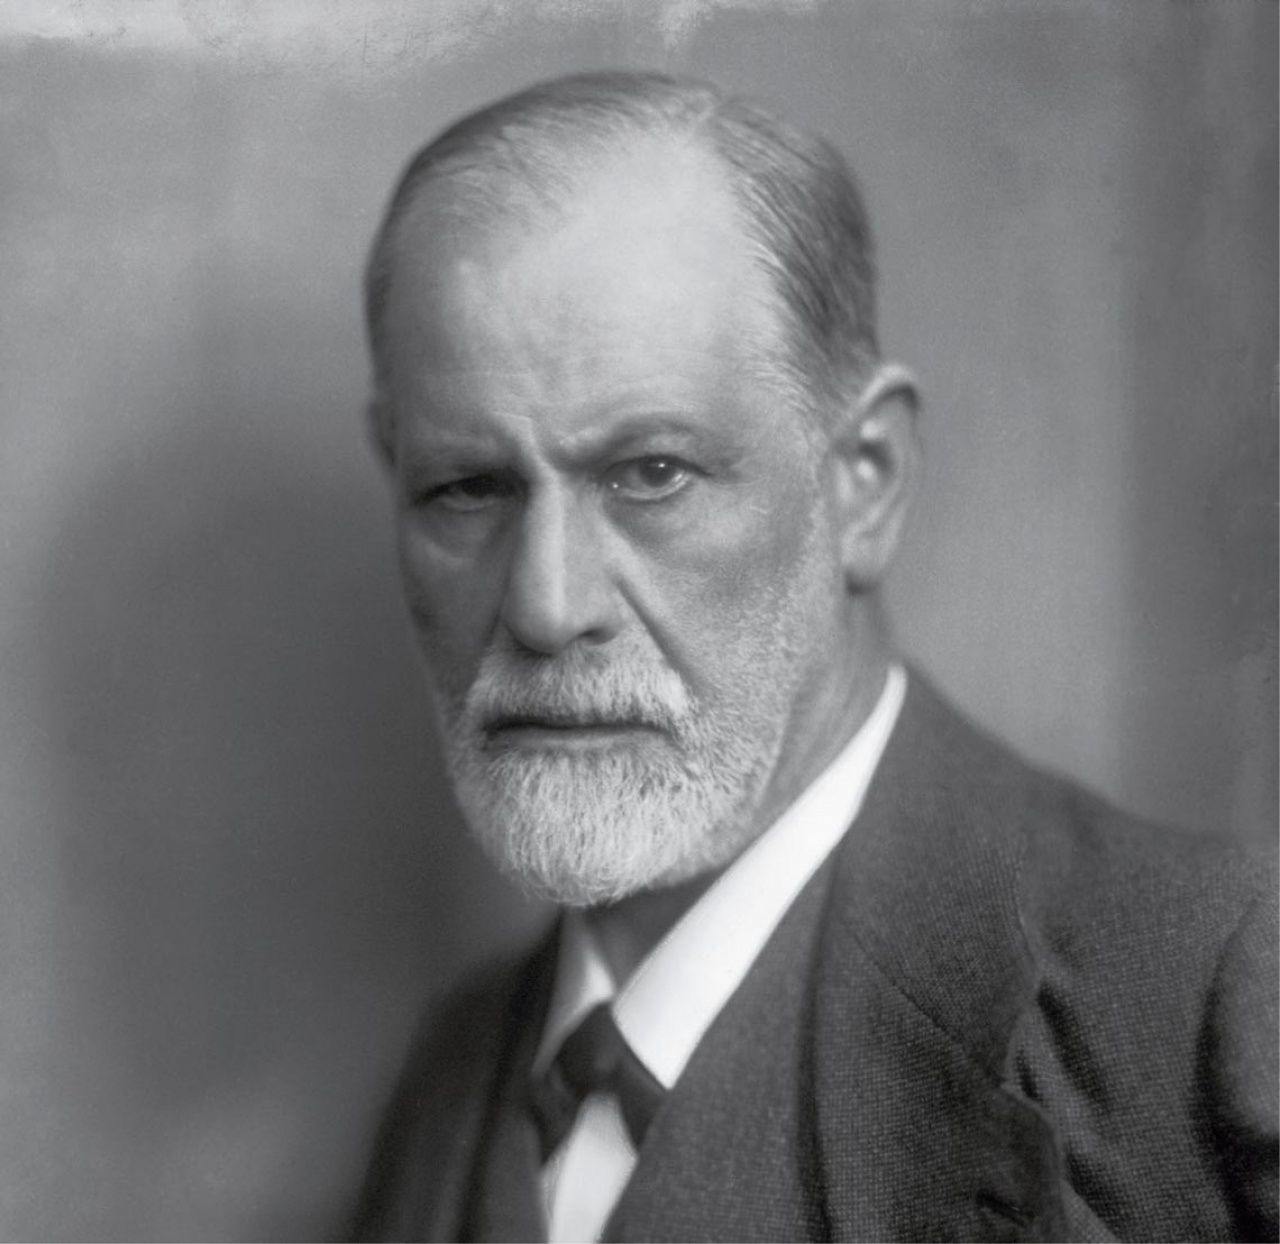 Sigismund Freud